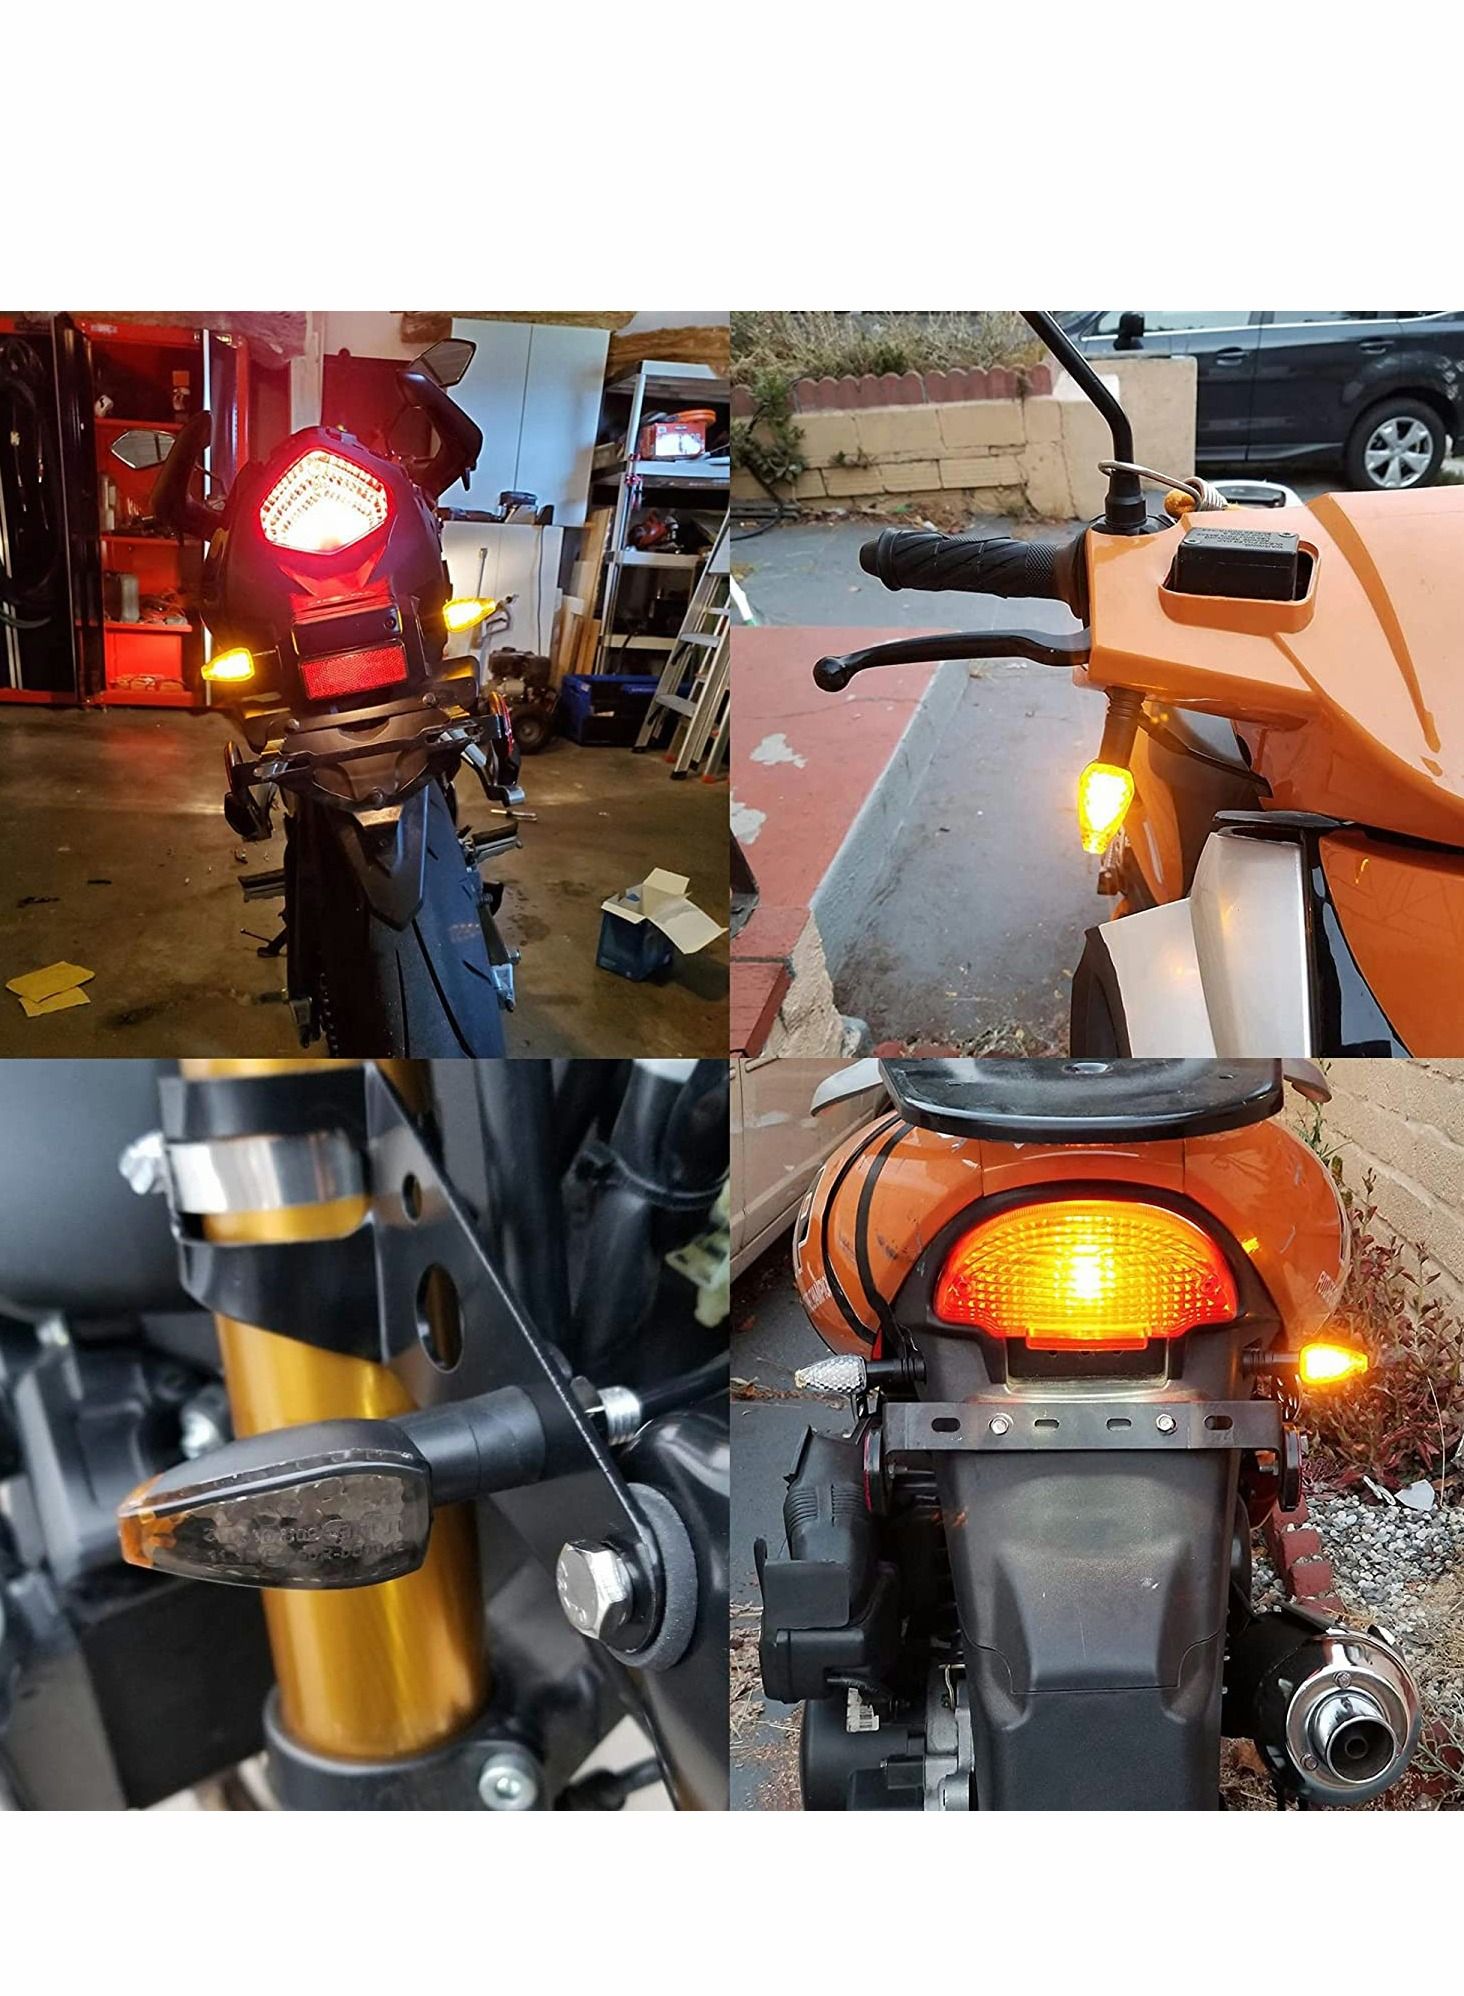 Motorcycle Turn Signal Lights, 4 Pcs 12V Universal Motorbike LED Indicator Blinker Amber Lamp Mini Stalk Arrow Light Front Rear Lights for Motorcycles 